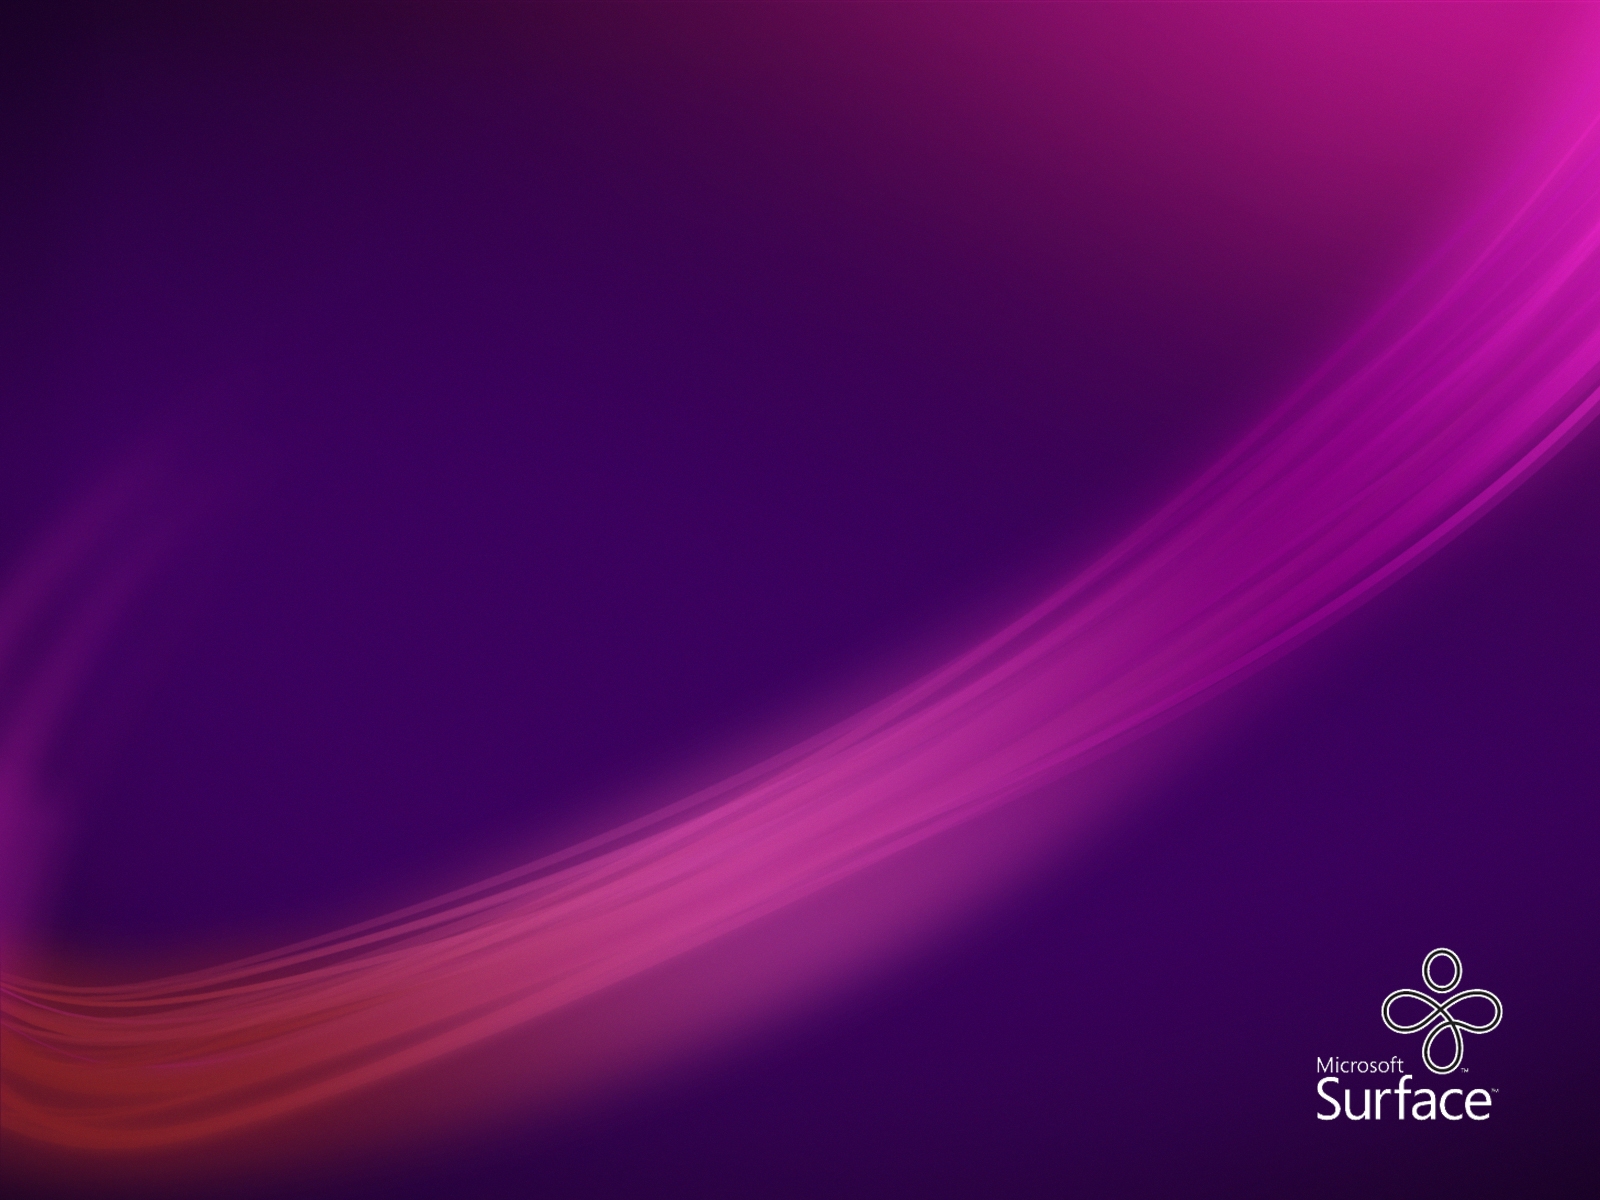 Microsoft Surface Full Purple Wallpaper Geekpedia